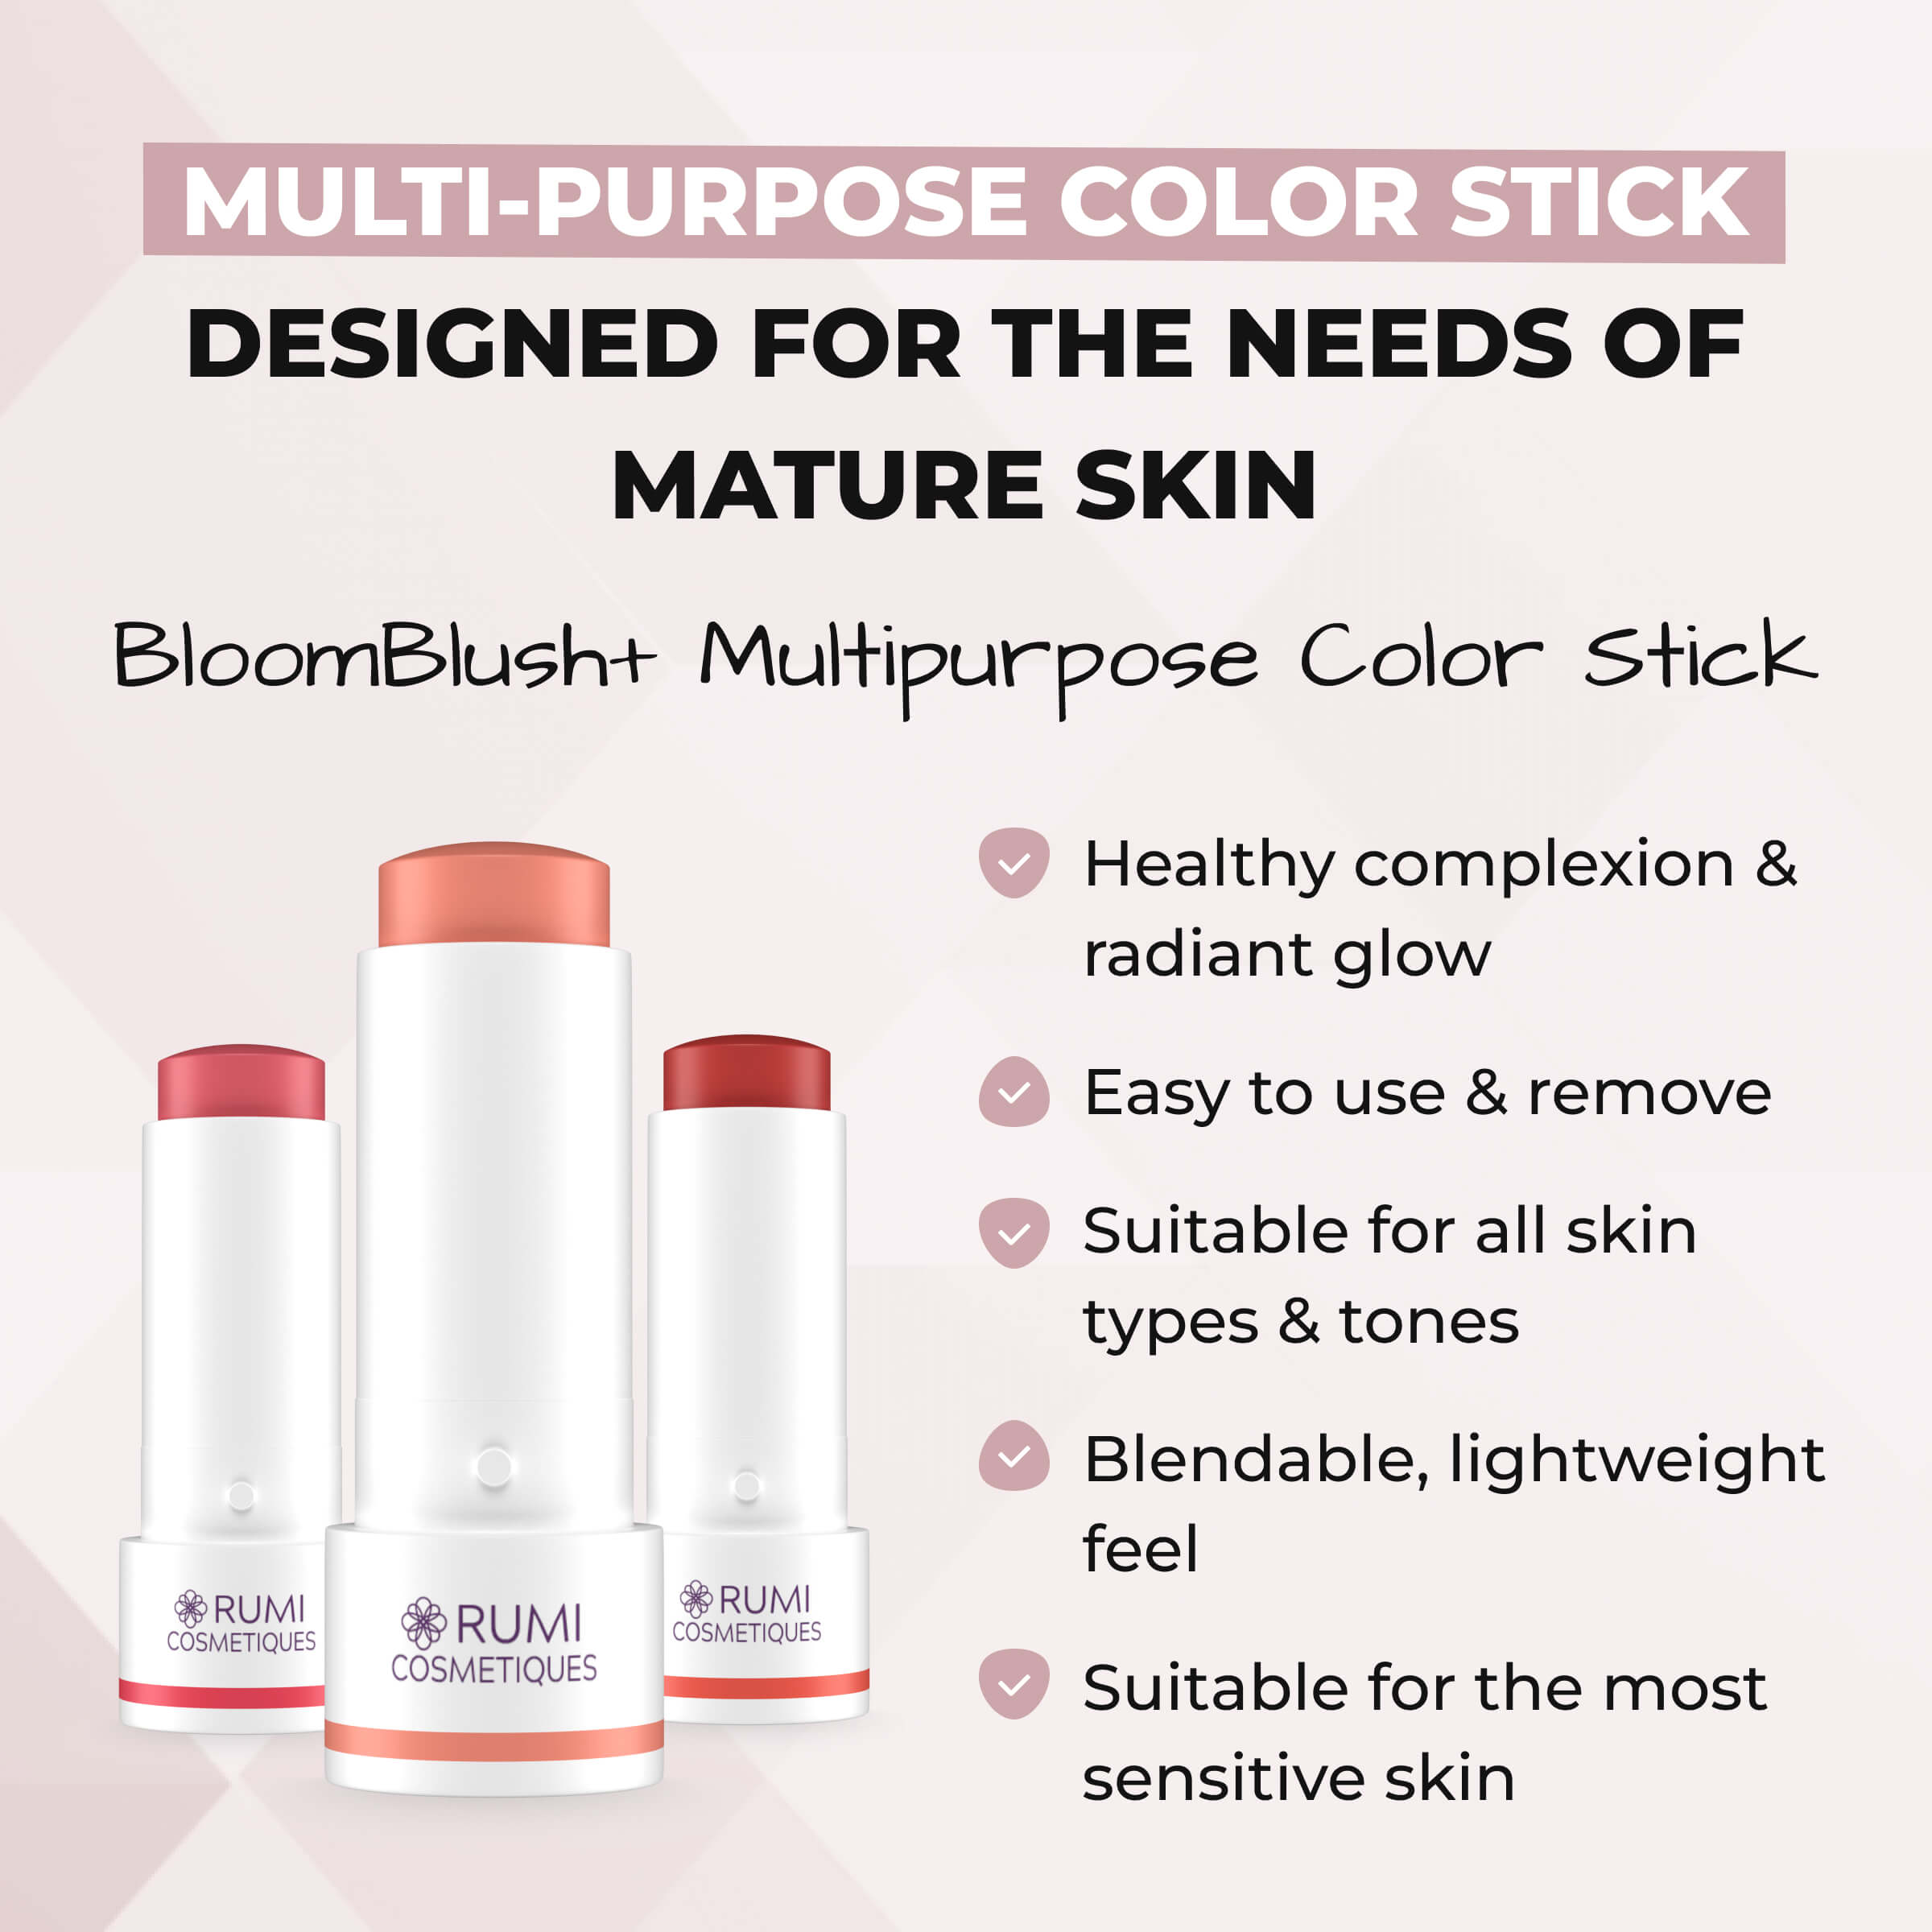 BloomBlush+ Multipurpose Color Stick